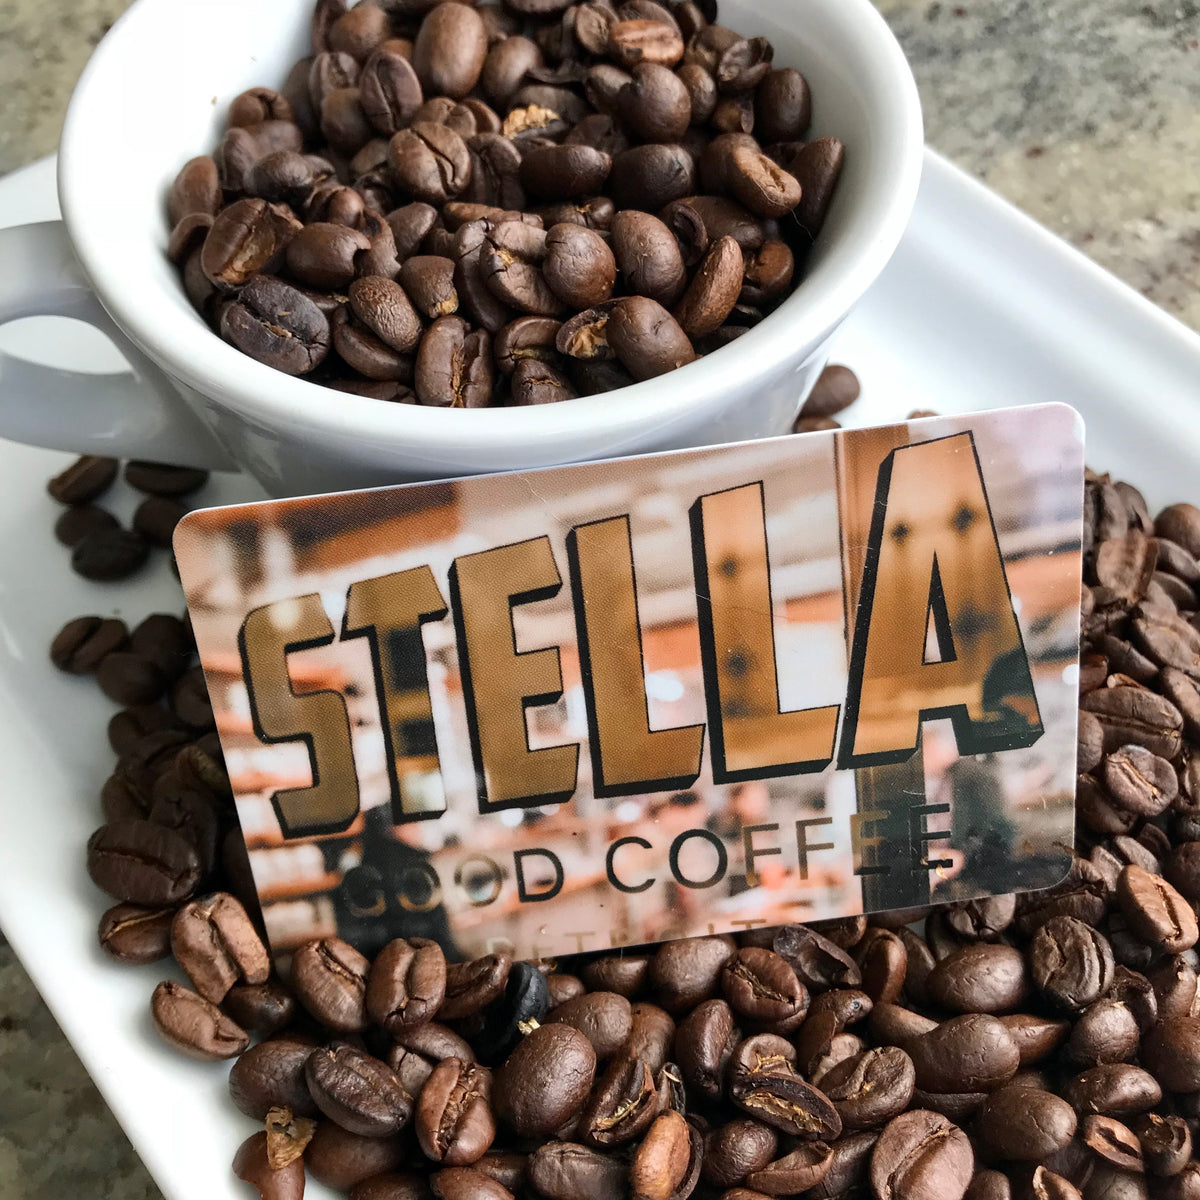 Stella Good Coffee Gift Card - $50    